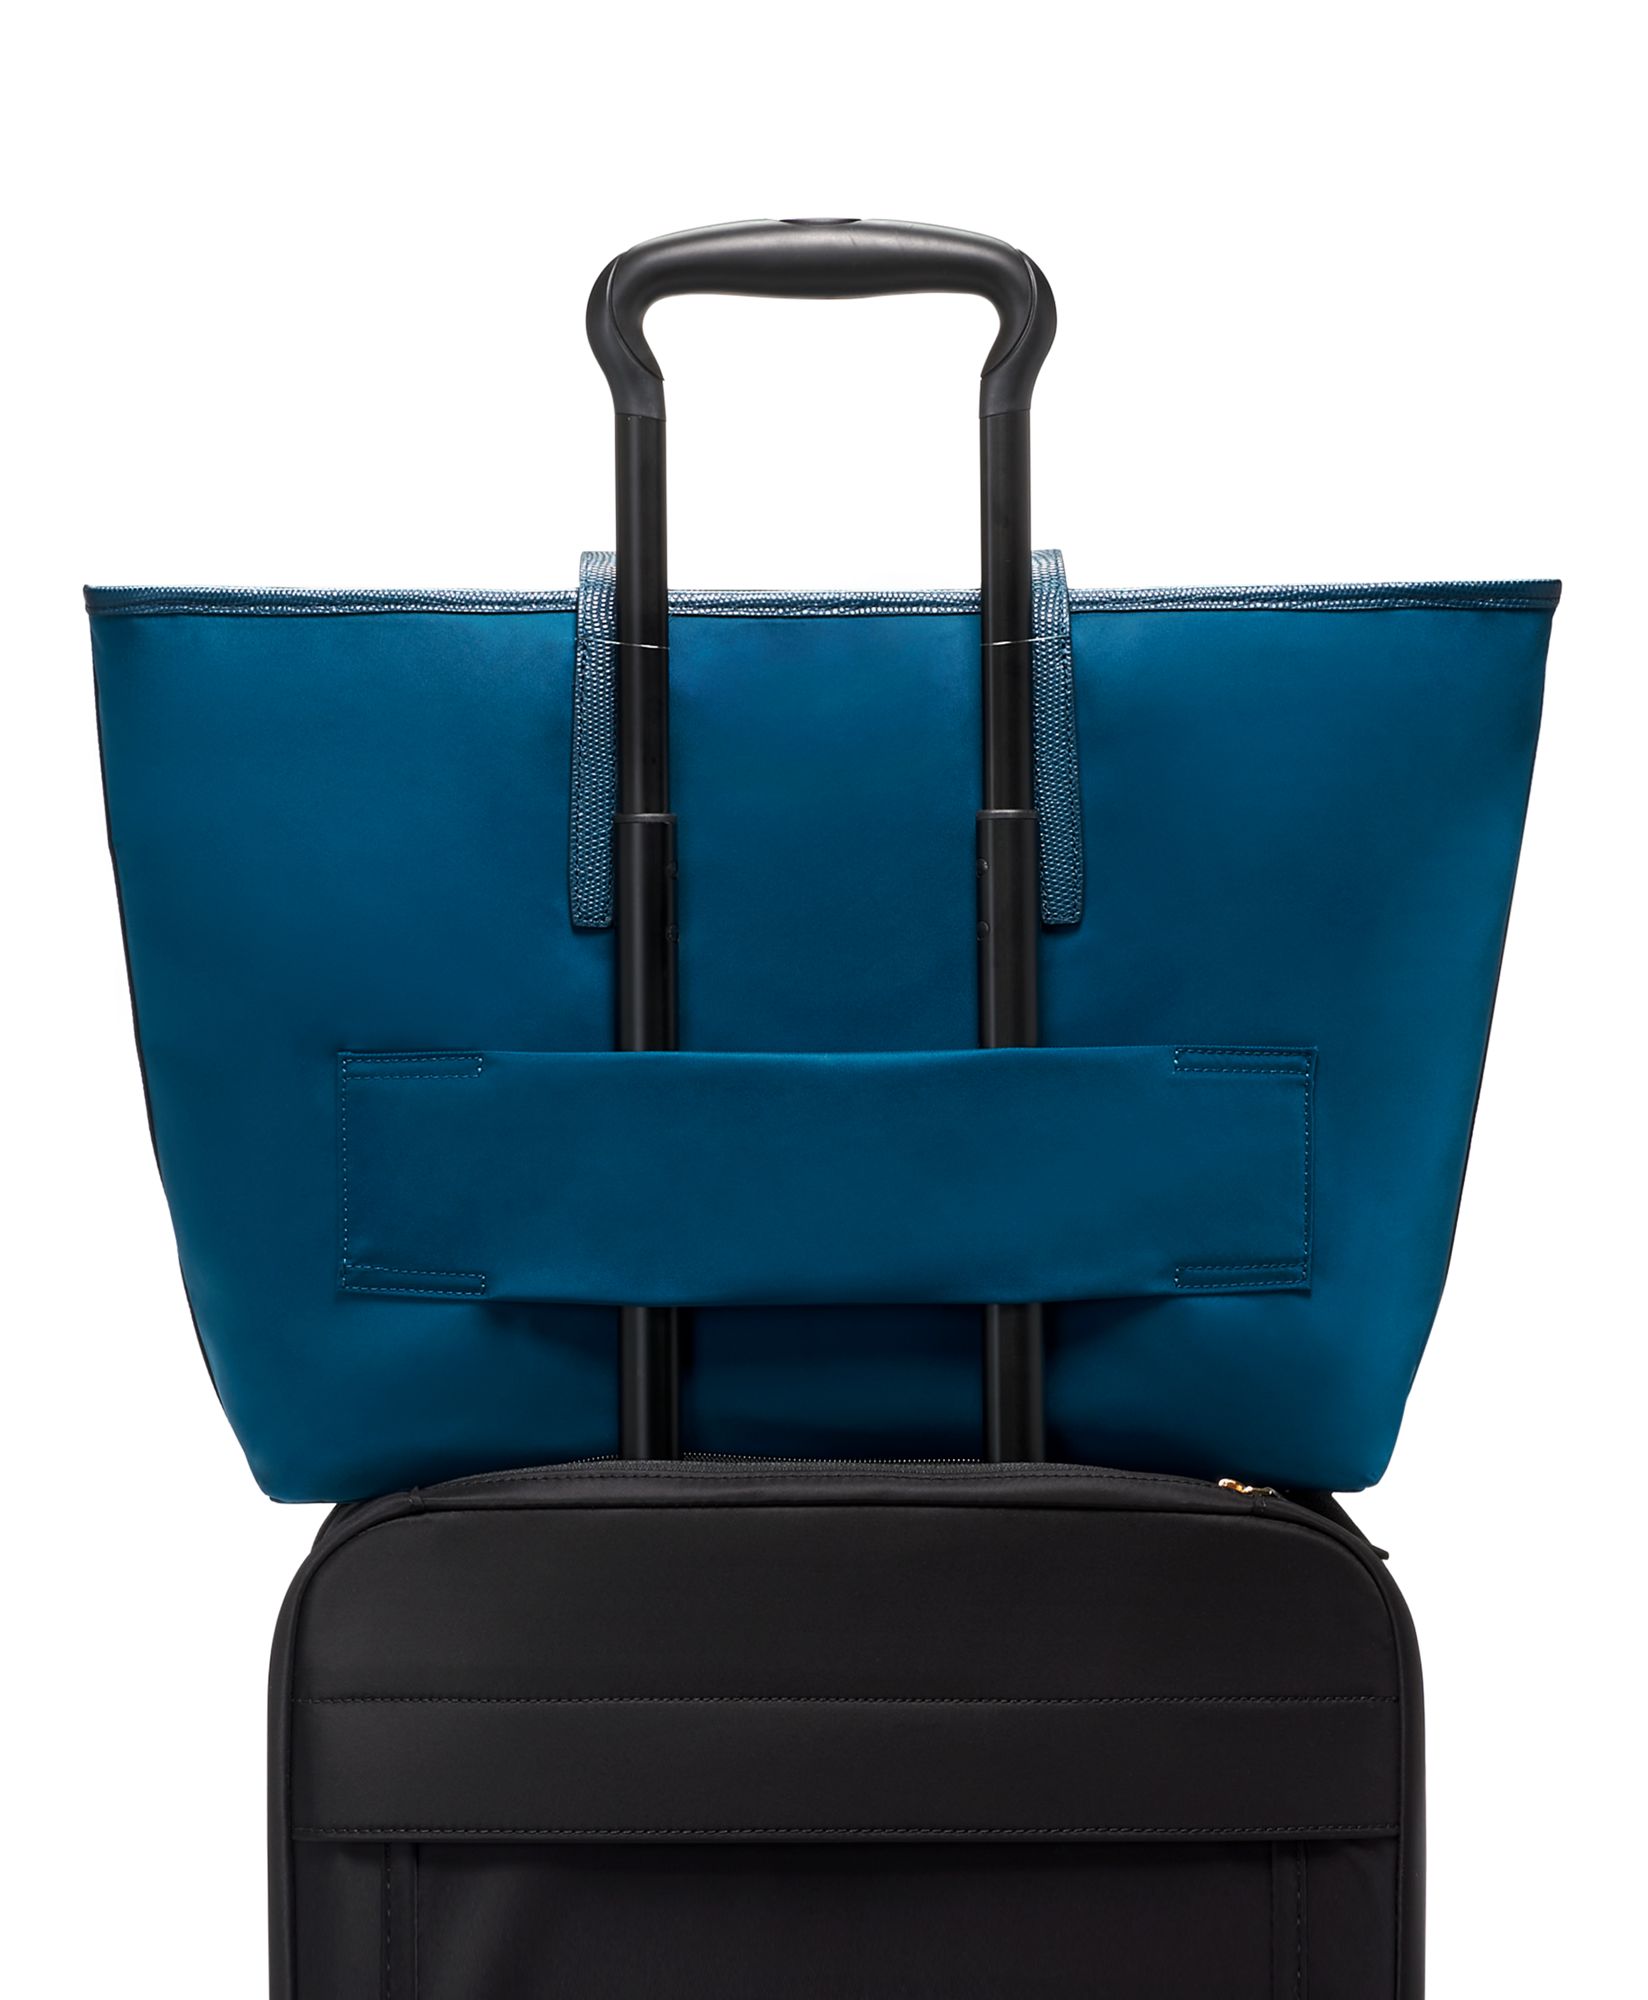 TUMI Voyageur Everyday Tote - Dark Turquoise - Irv’s Luggage